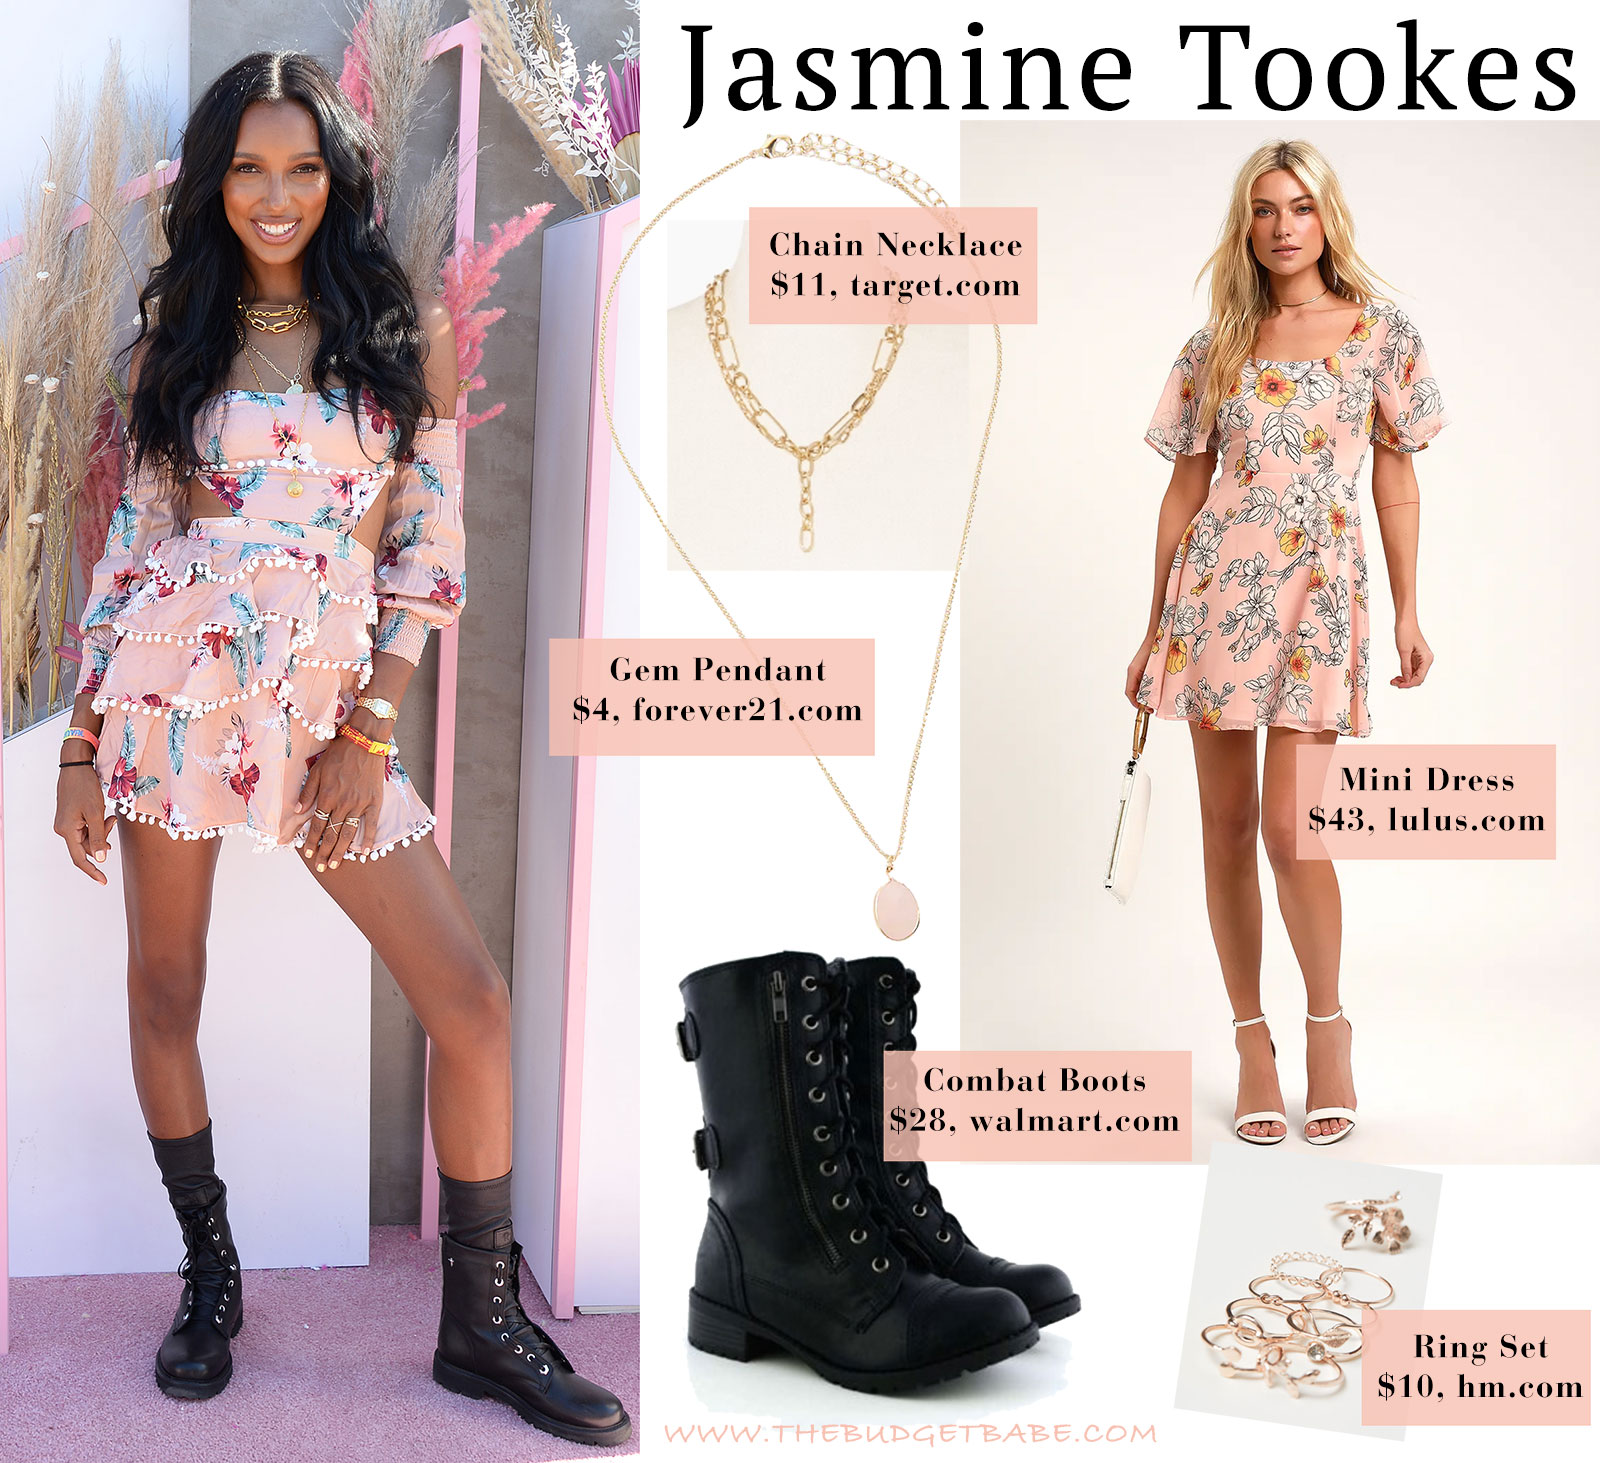 Jasmine Tookes at Coachella, love her style